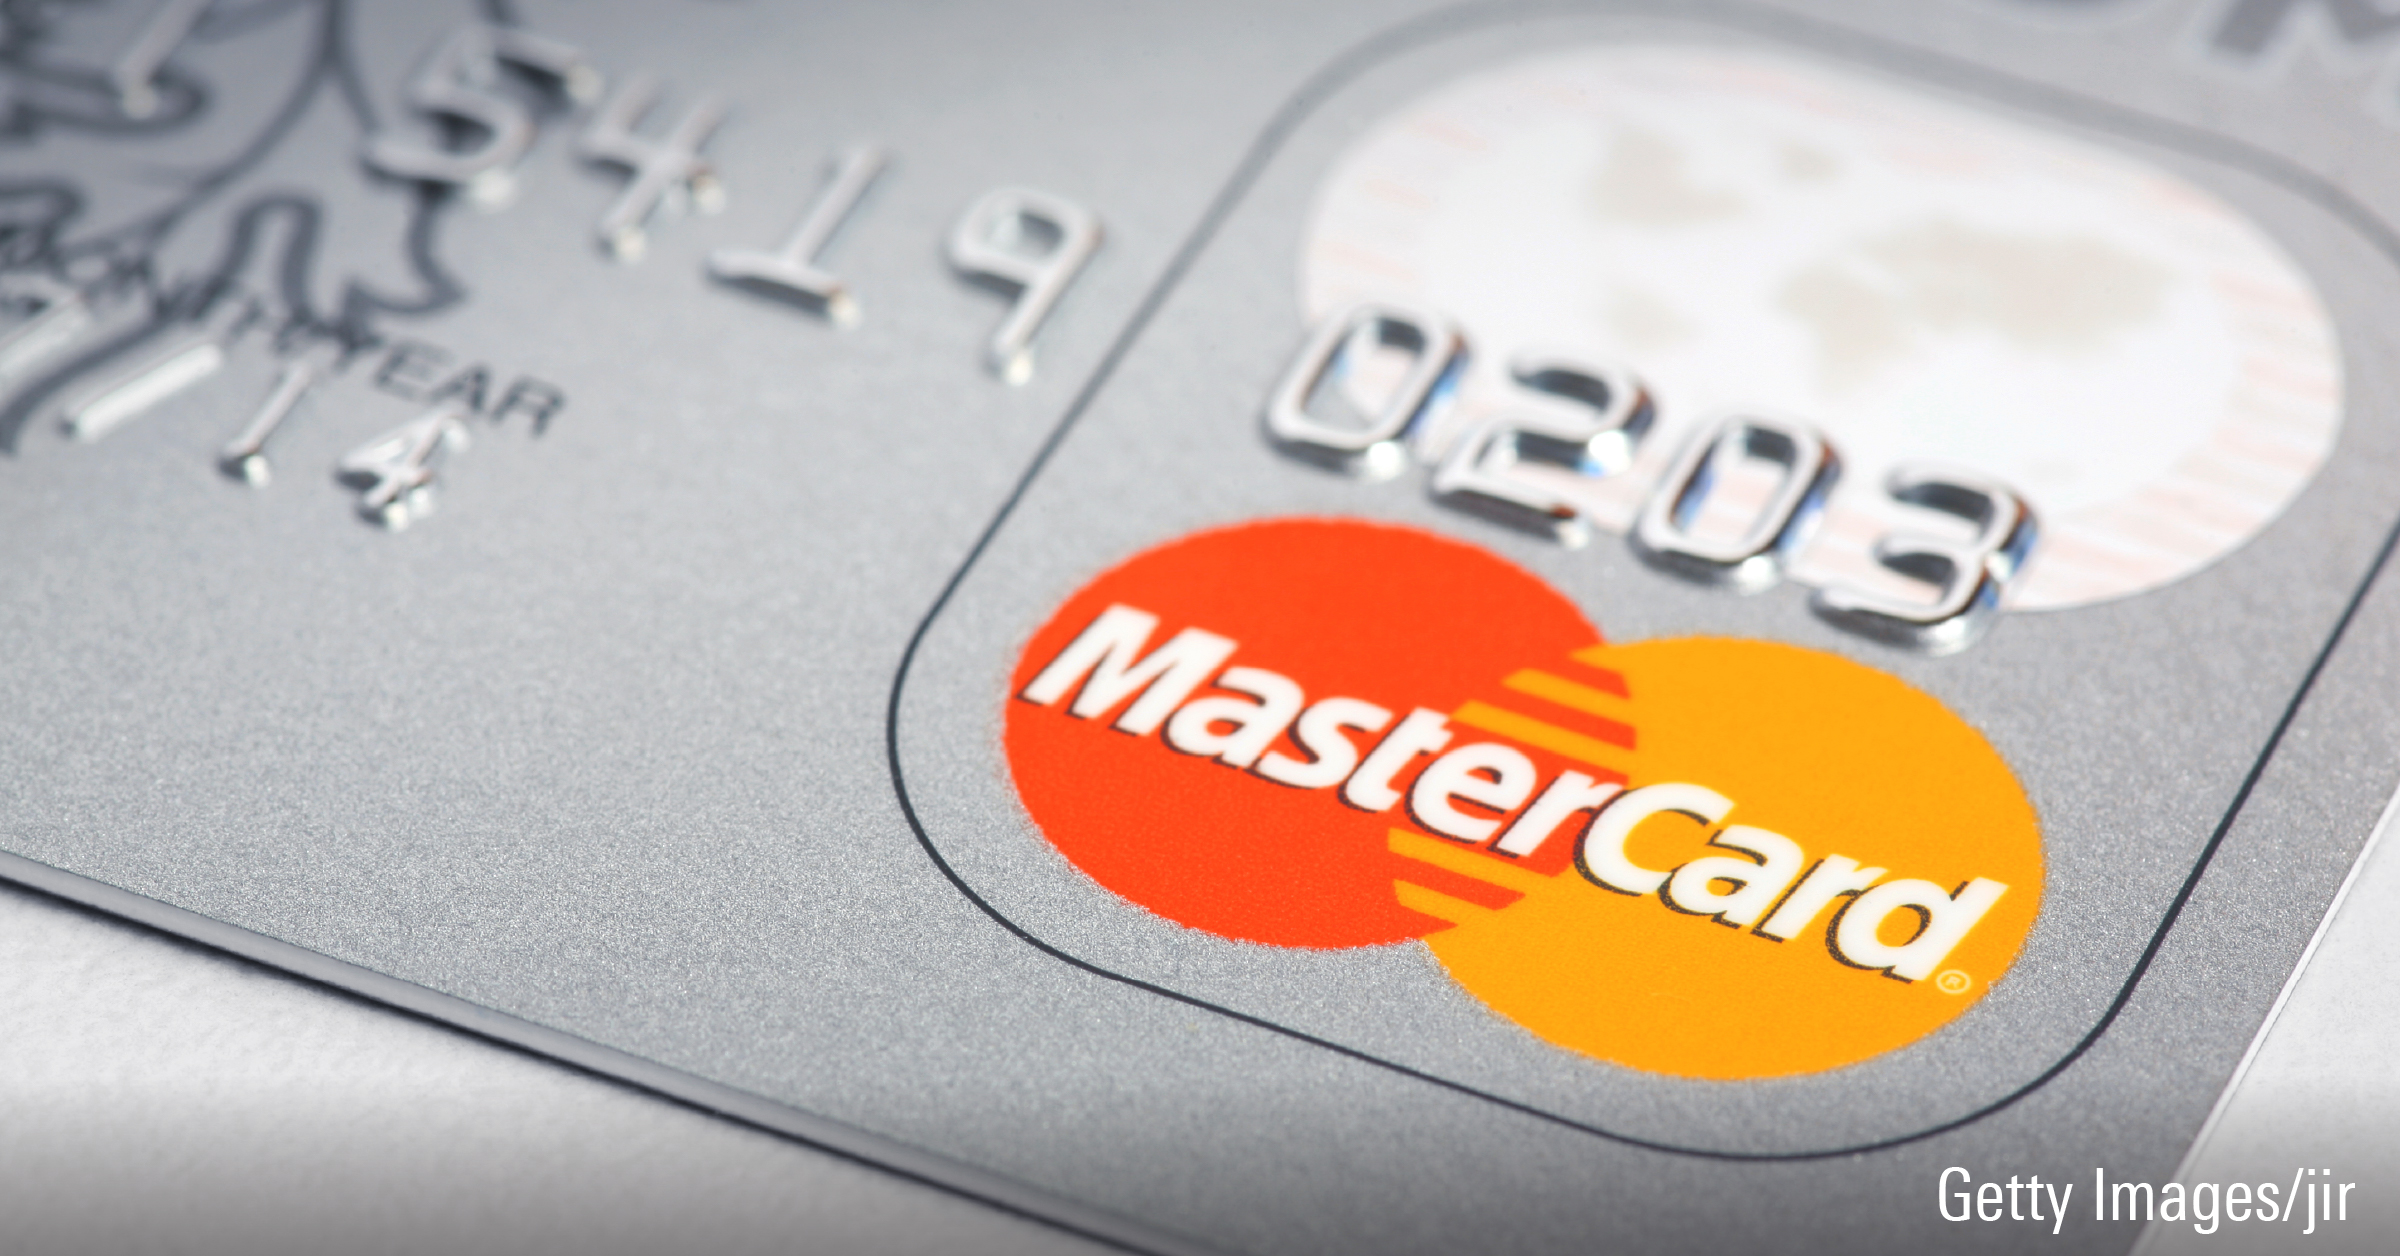 MasterCard Logo on credit card.